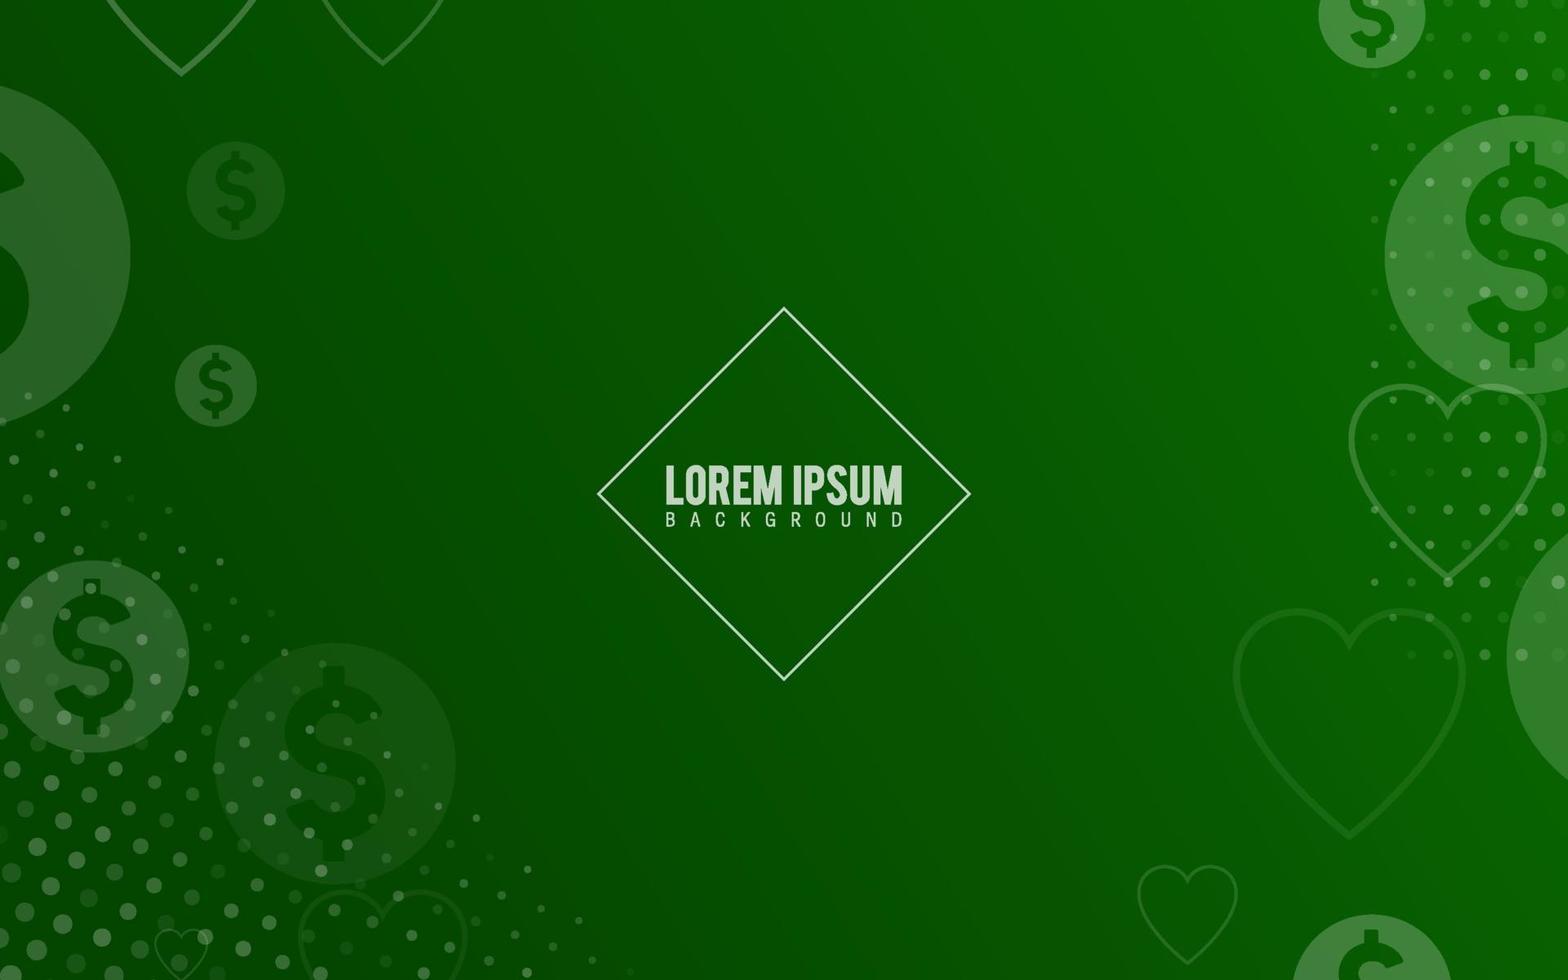 fondo verde, vector de ilustración abstracta minimalista aleatoria para logotipo, tarjeta, banner, web e impresión.